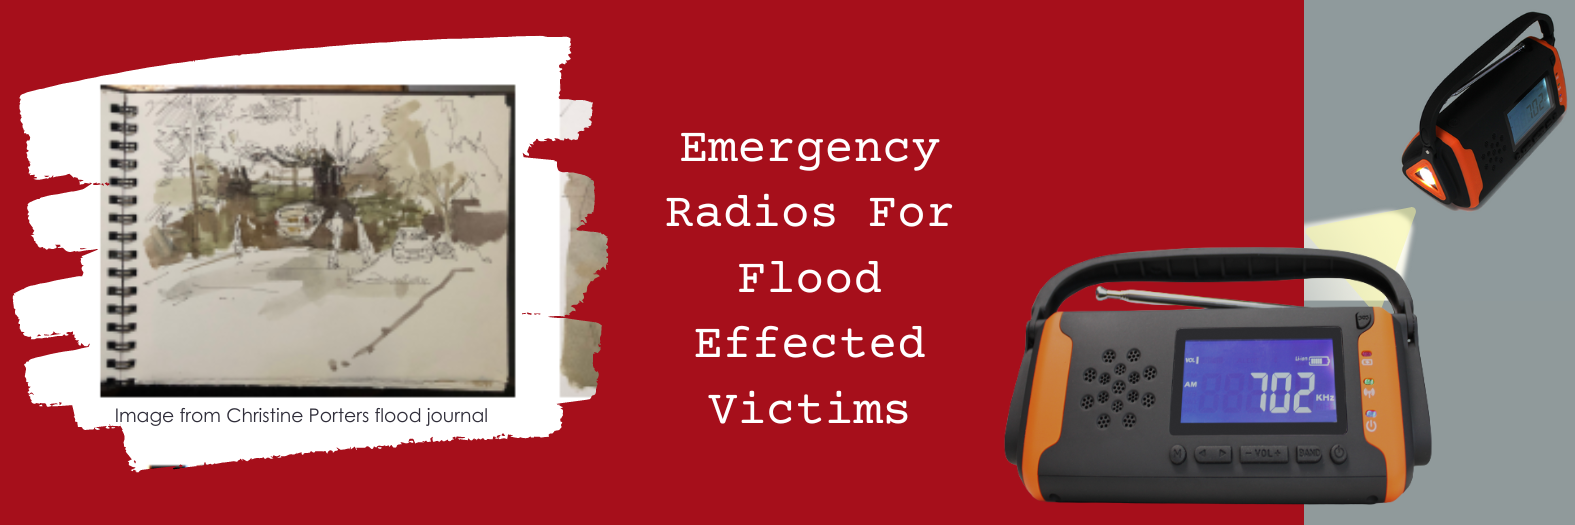 Emergency radio for flood victims 